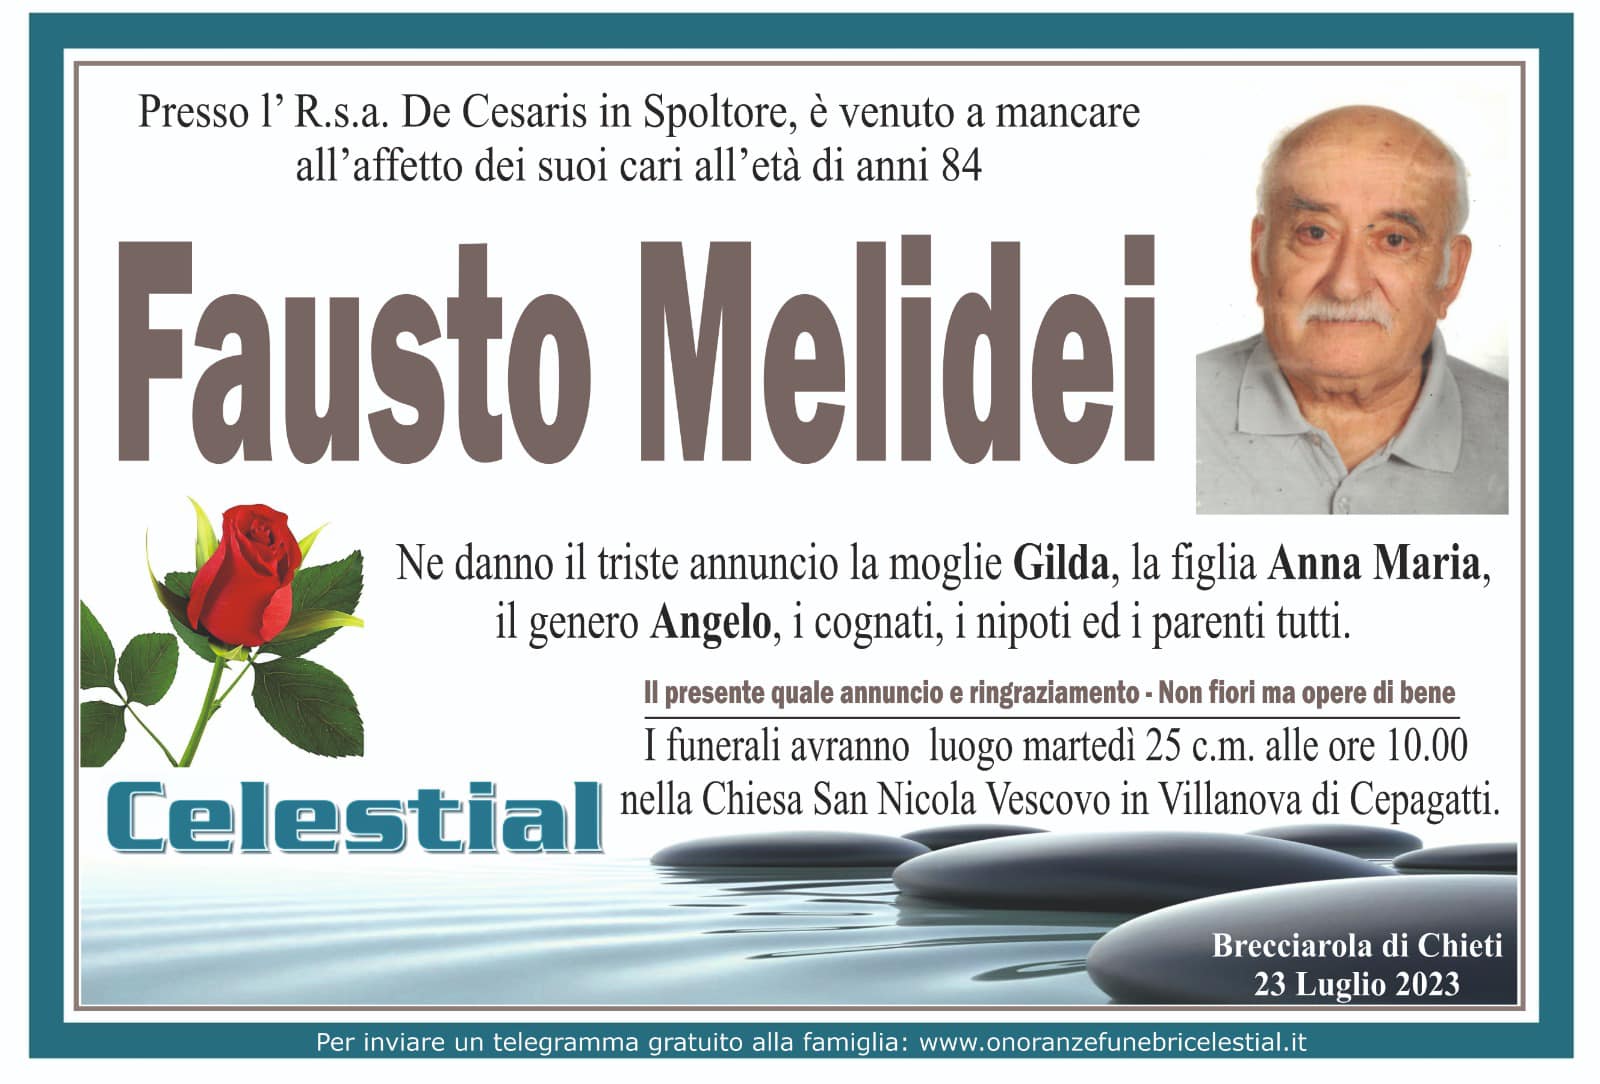 Fausto Melidei